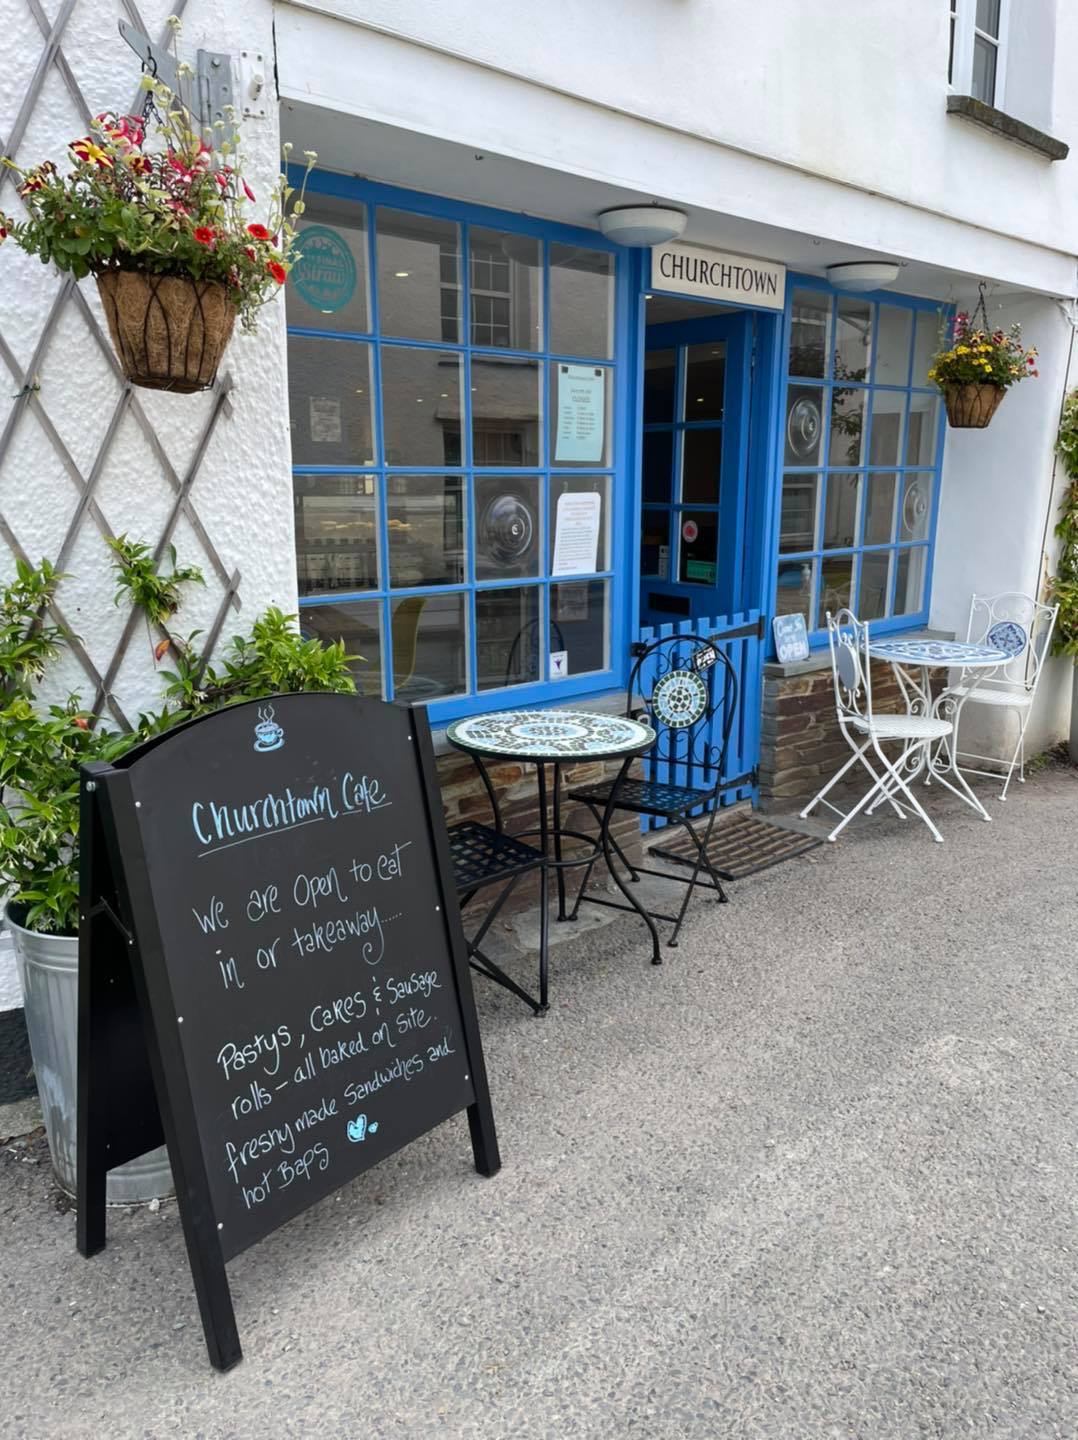 Churchtown - St Teath village cafe